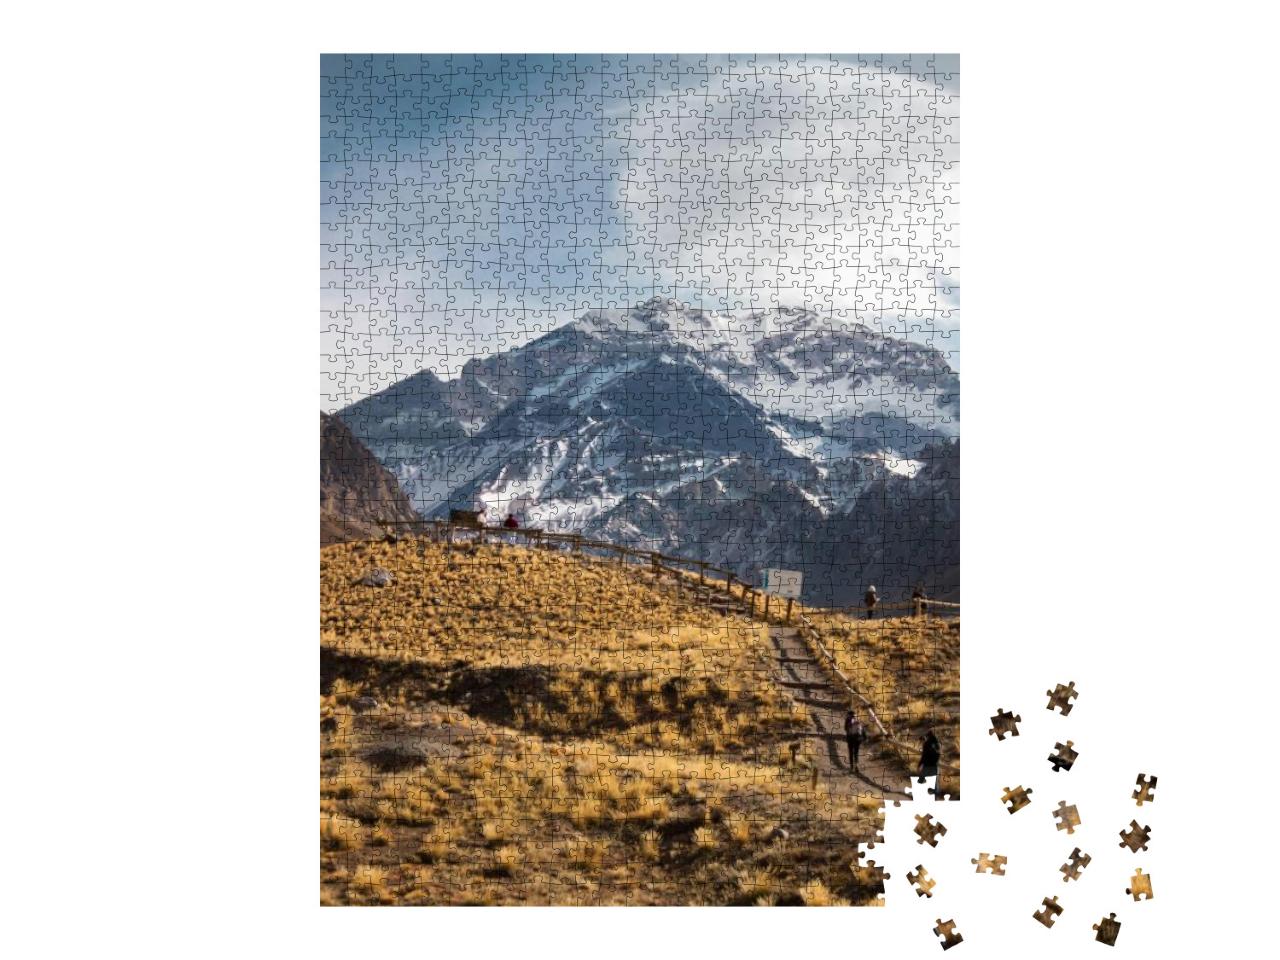 Puzzle 1000 Teile „Aconcagua montain, aconcagua national park, Mendoza - Argentinien“